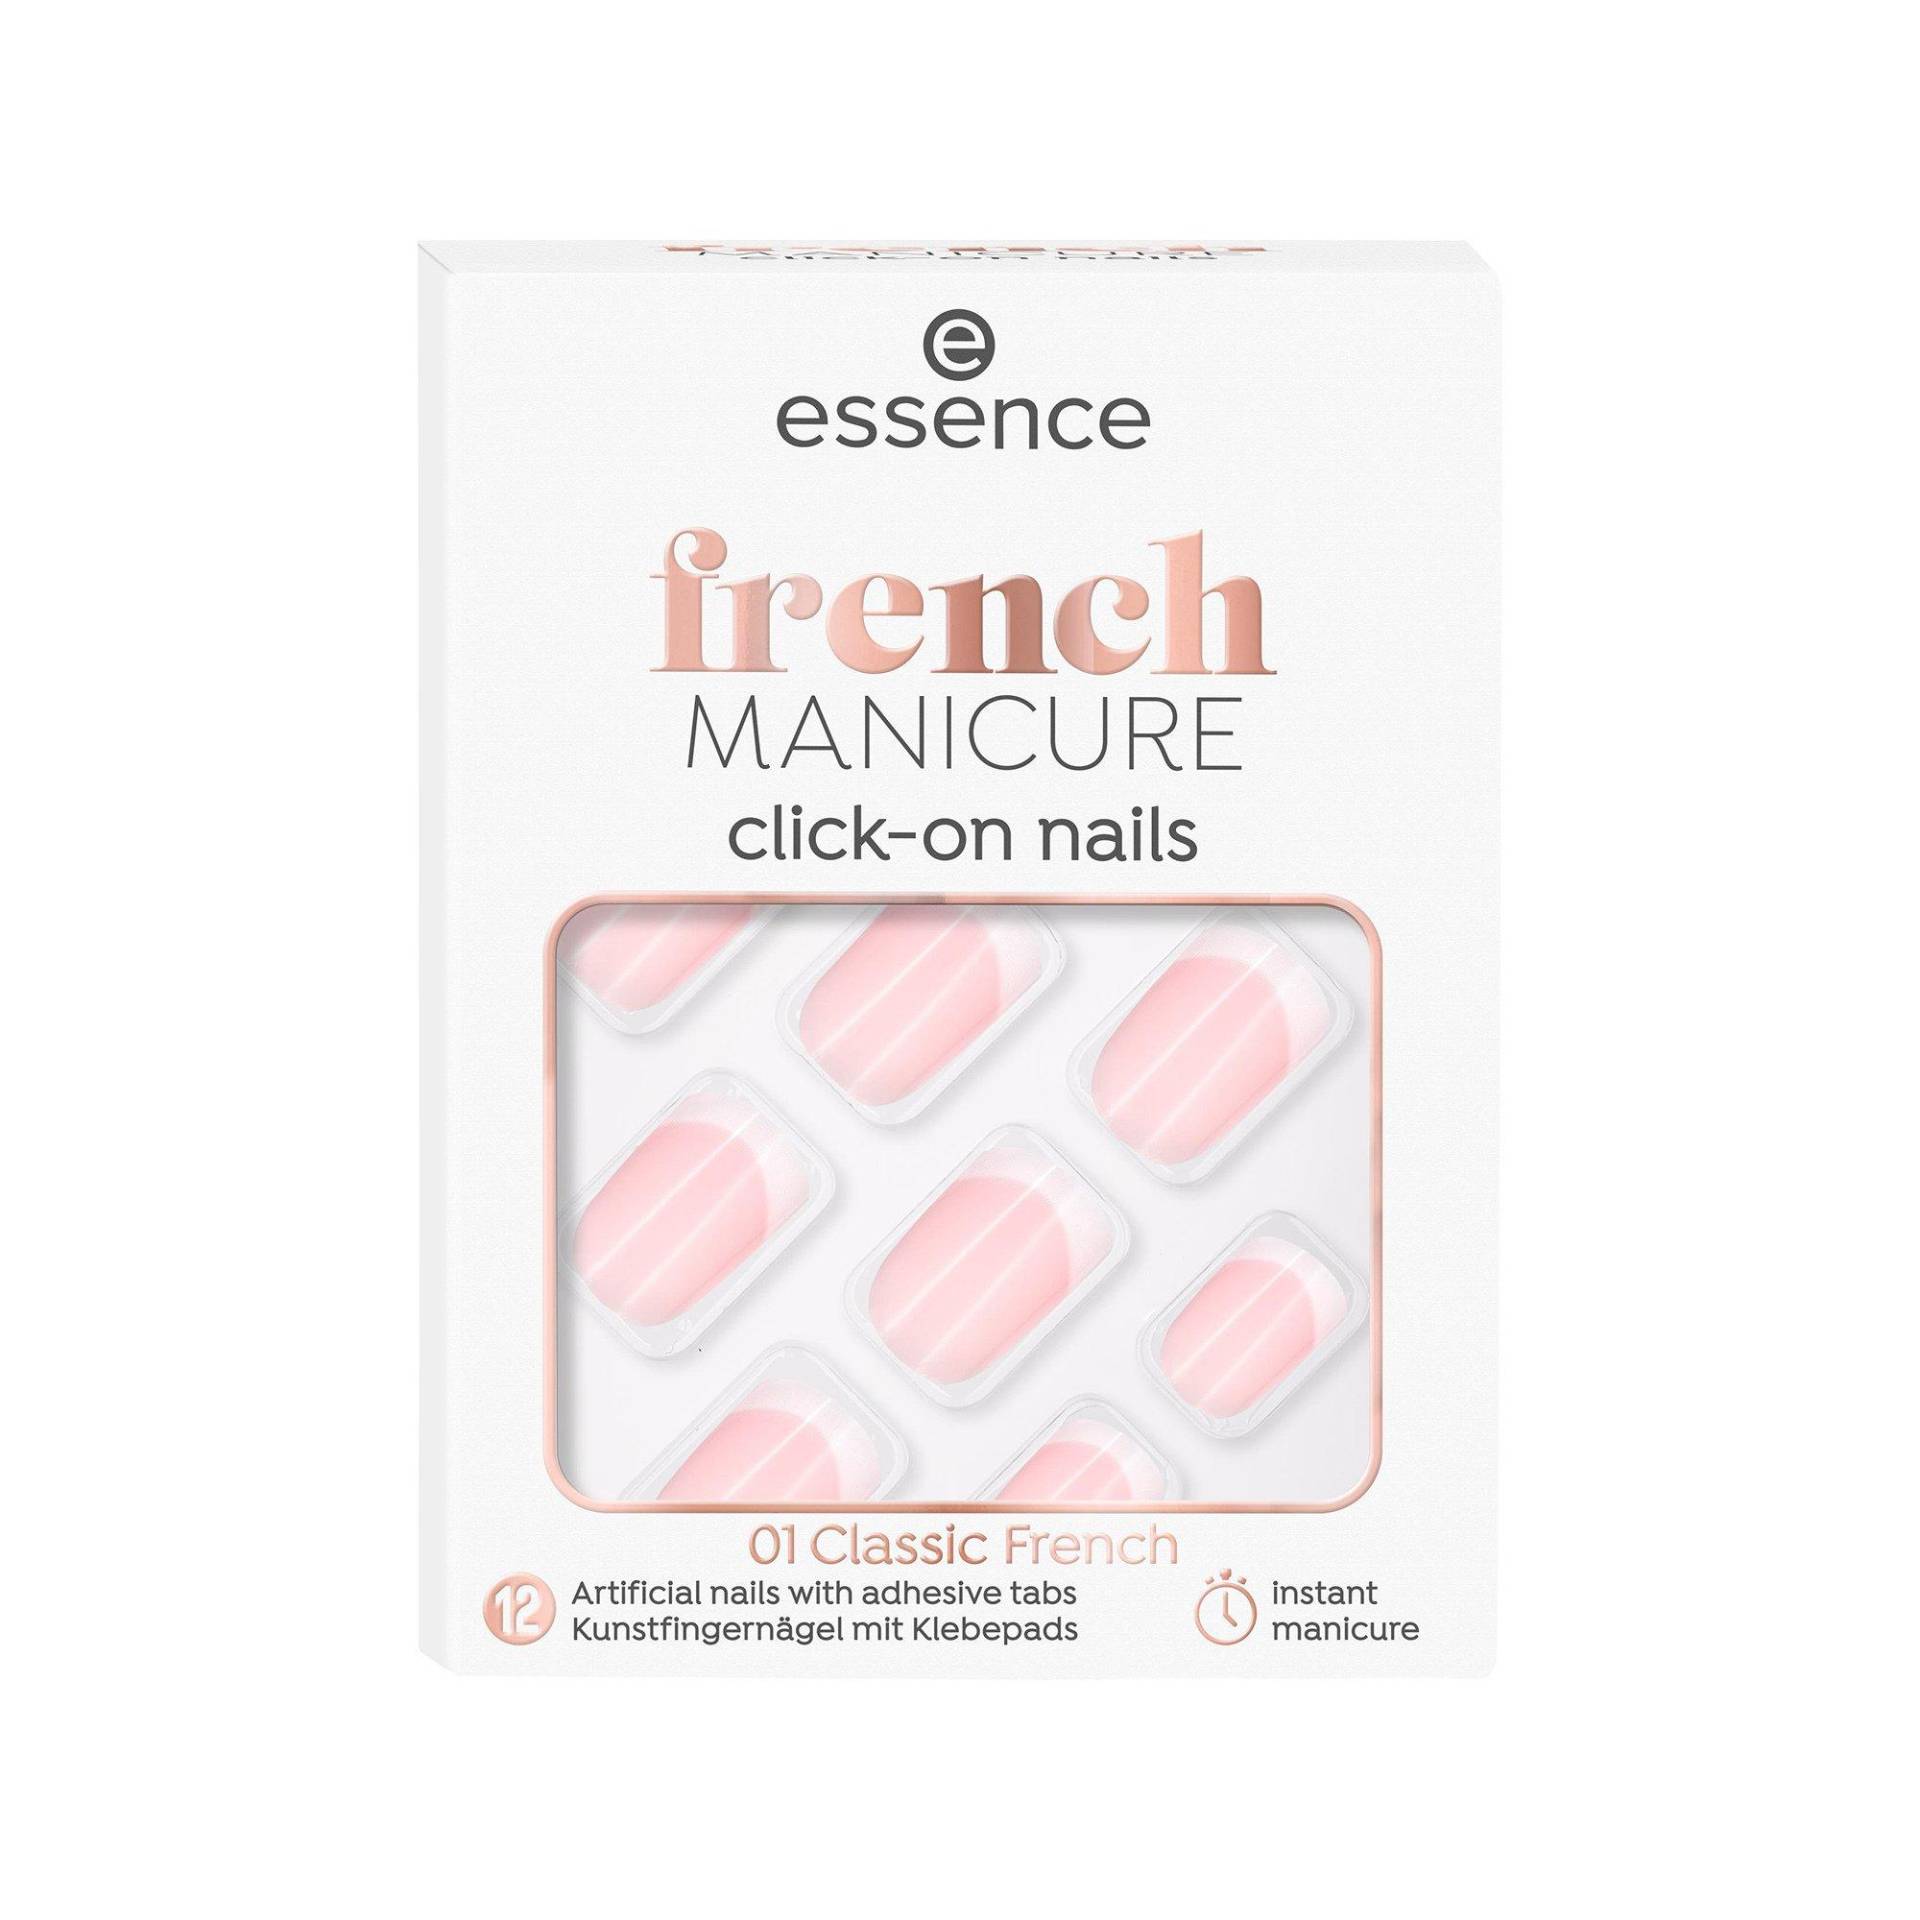 French Manicure Click-on Nails 01 Damen von essence